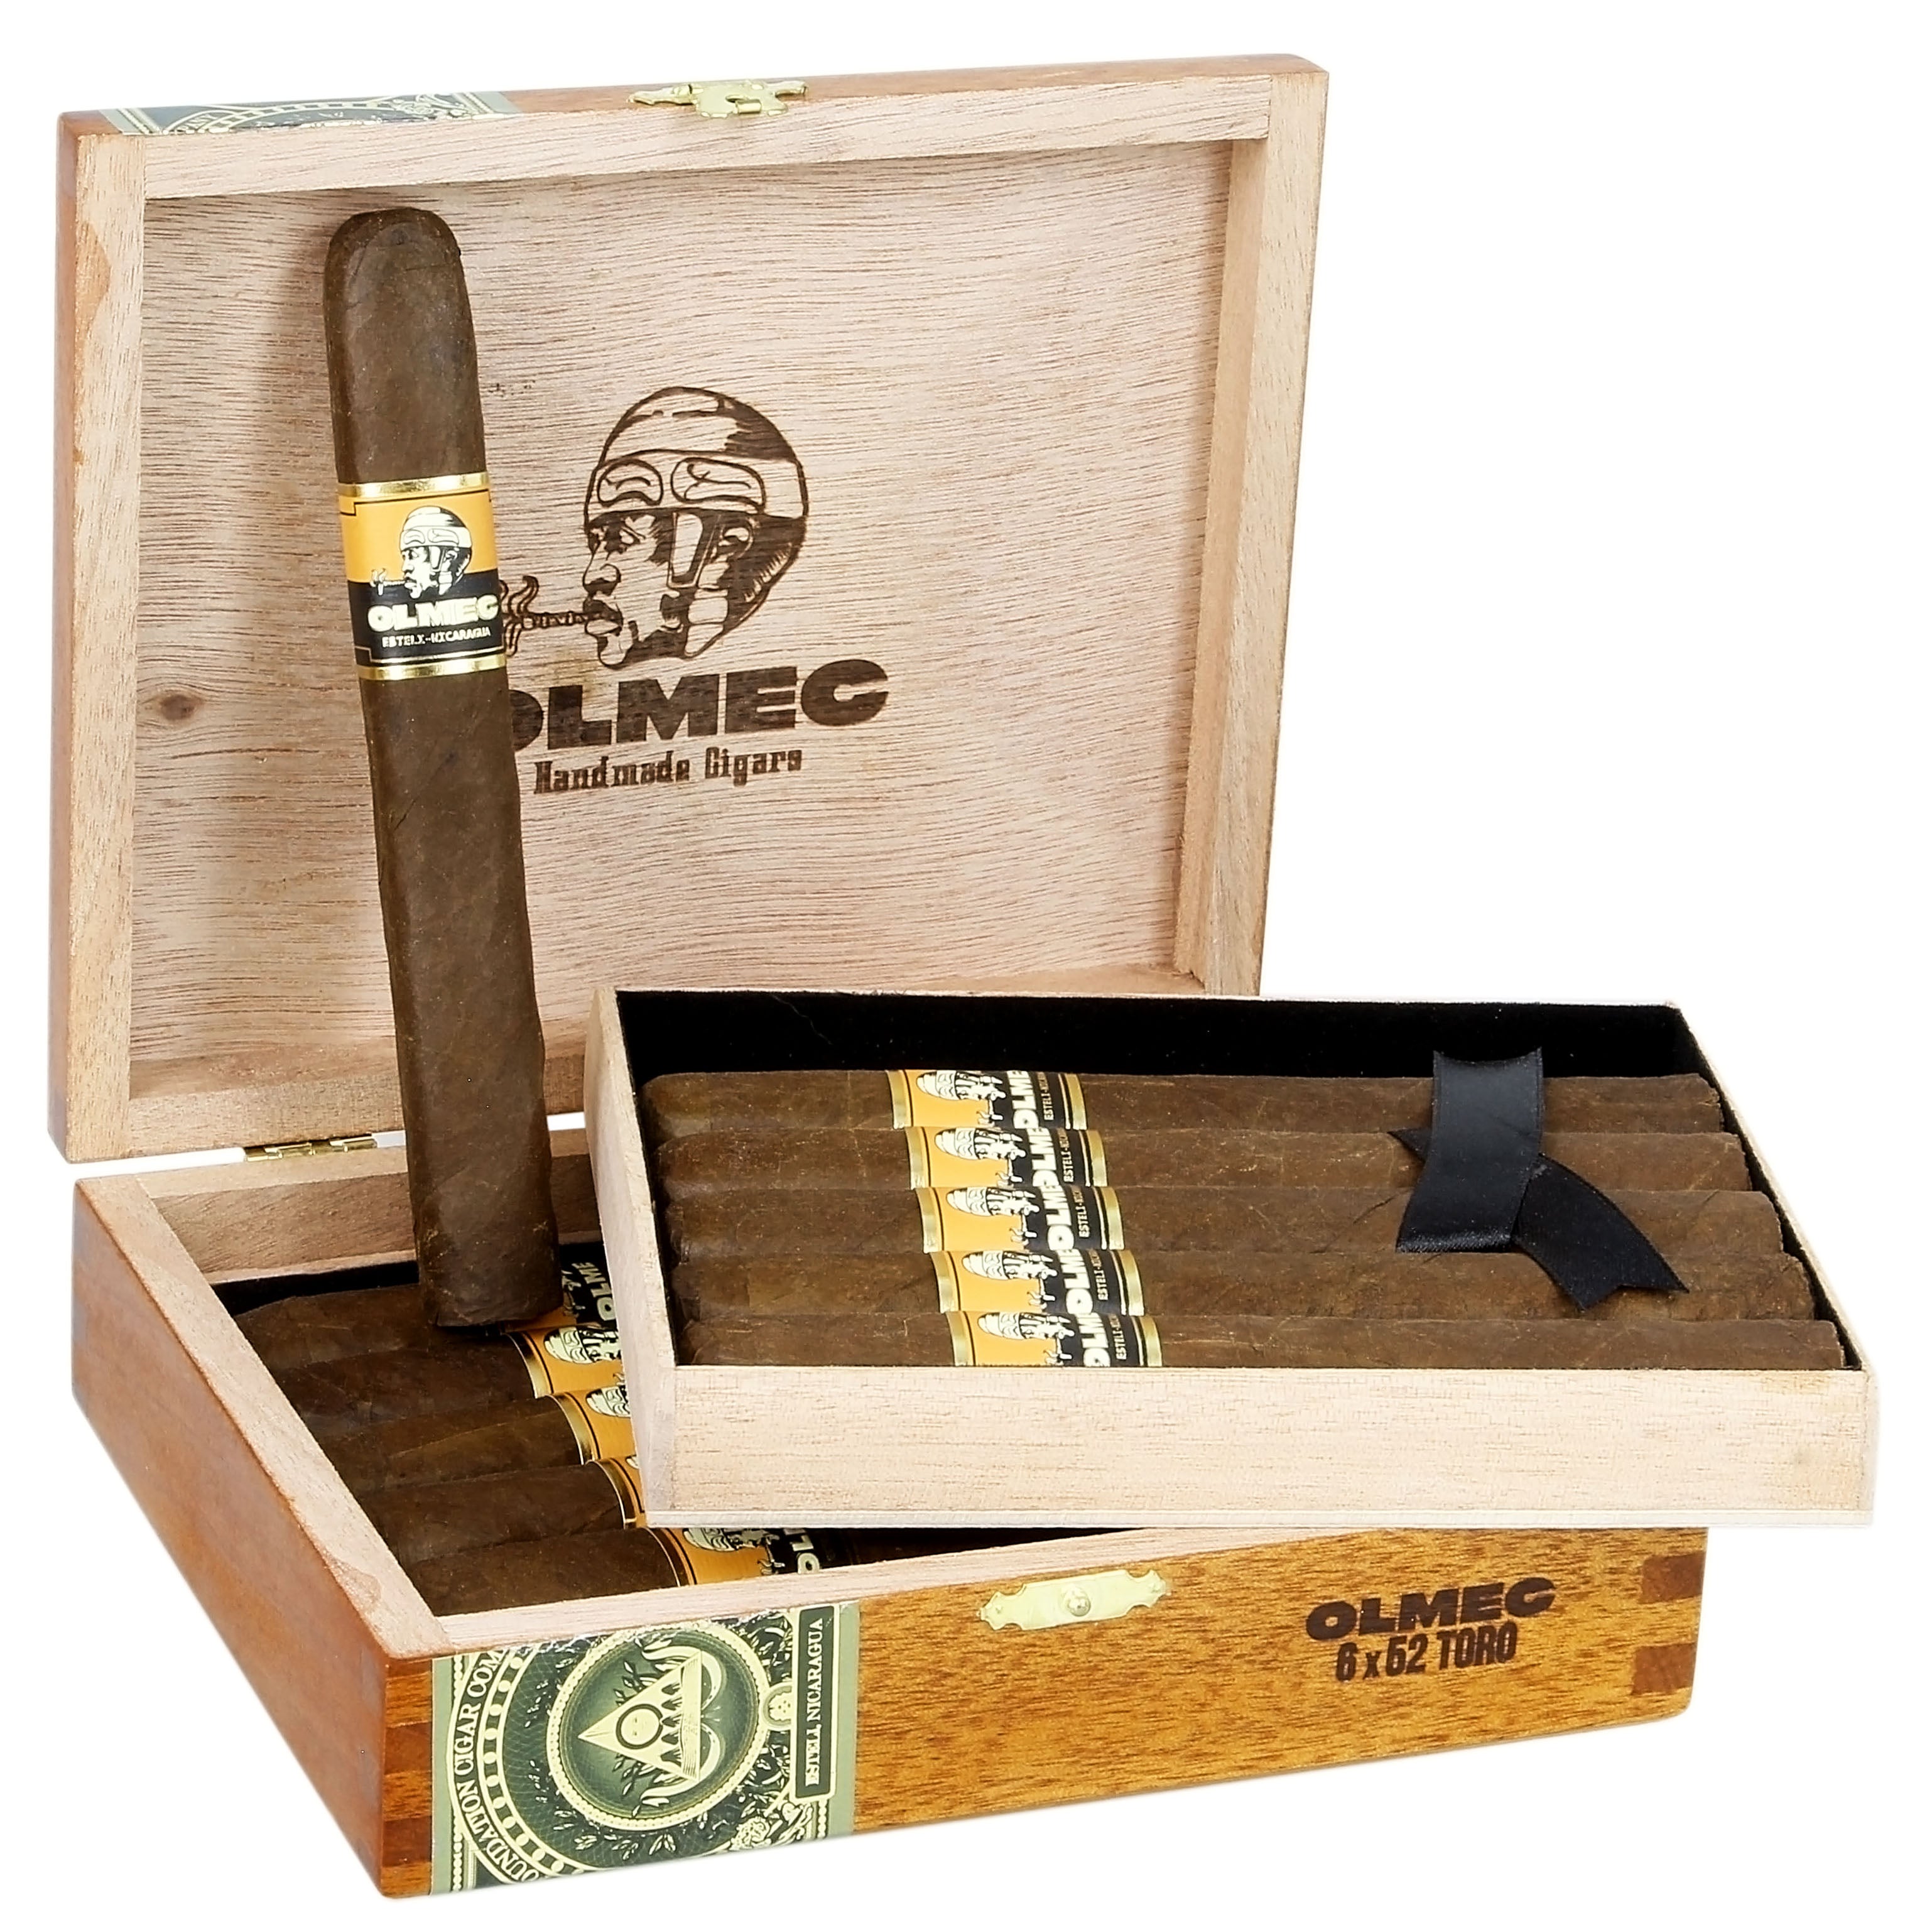 Foundation Cigars Olmec-Toro